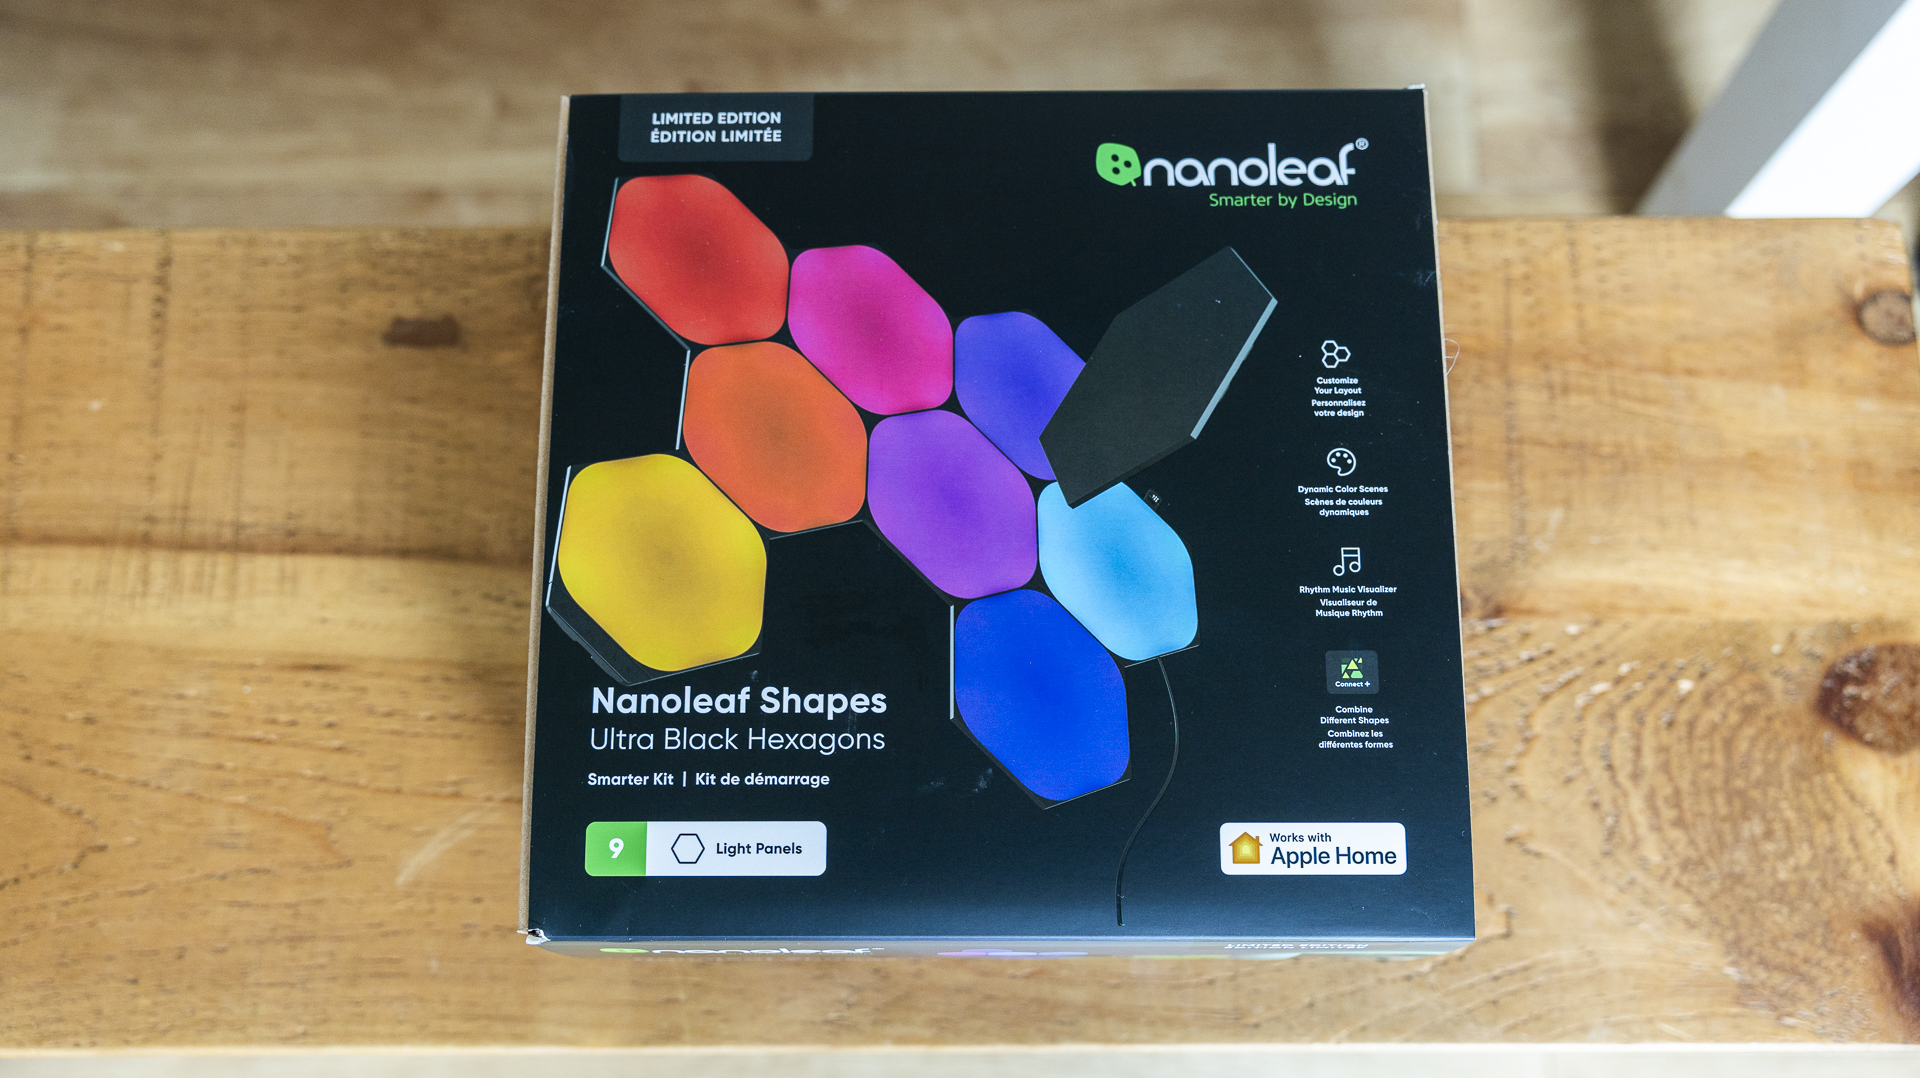 The Nanoleaf Shapes hexagons box